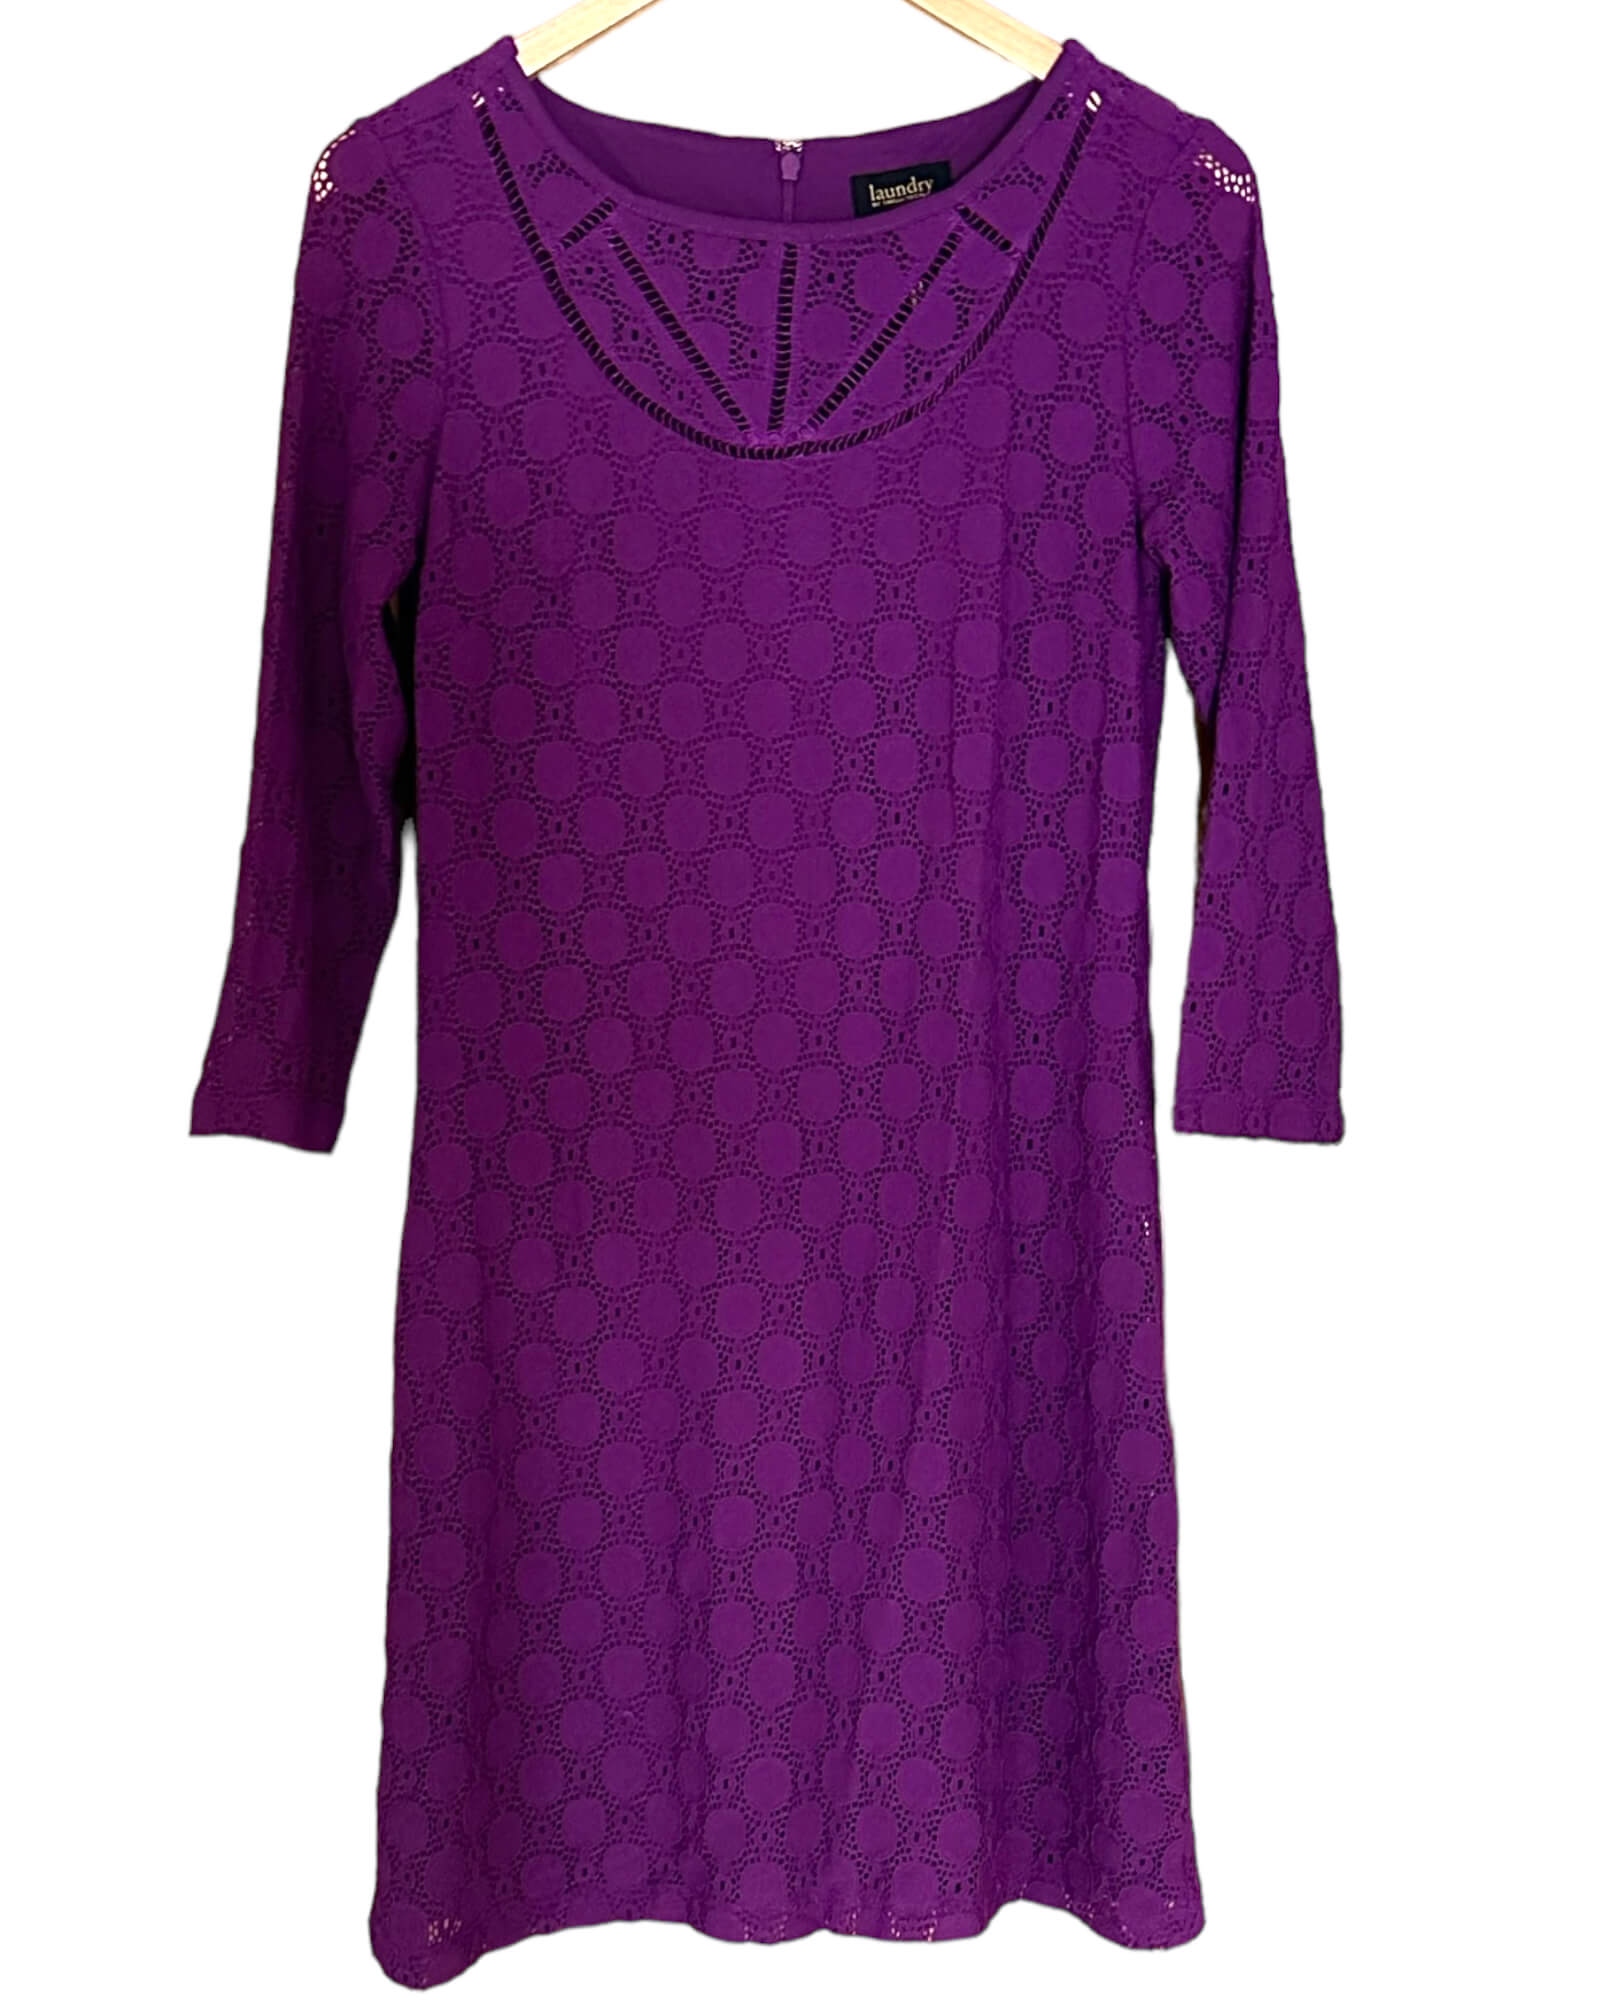 Cool Winter LAUNDRY BY SHELLI SEGAL grape purple lace dress